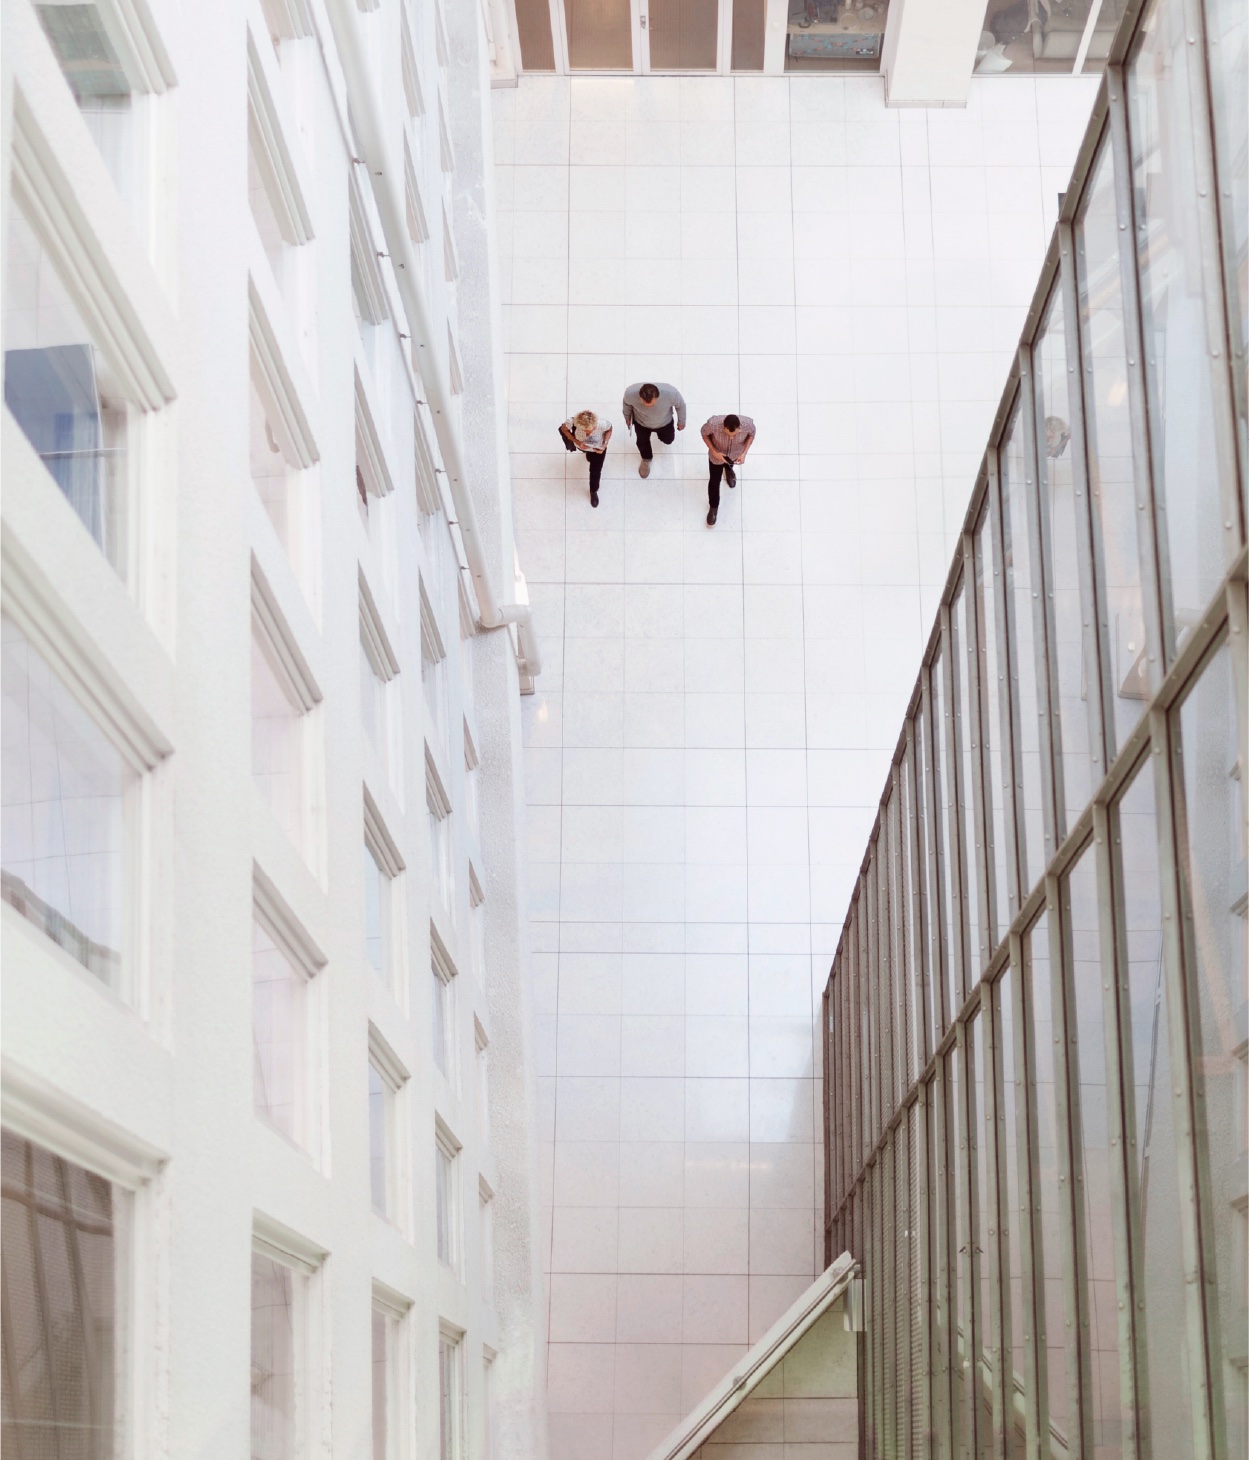 Aerial photo of three people walking down a hallway.